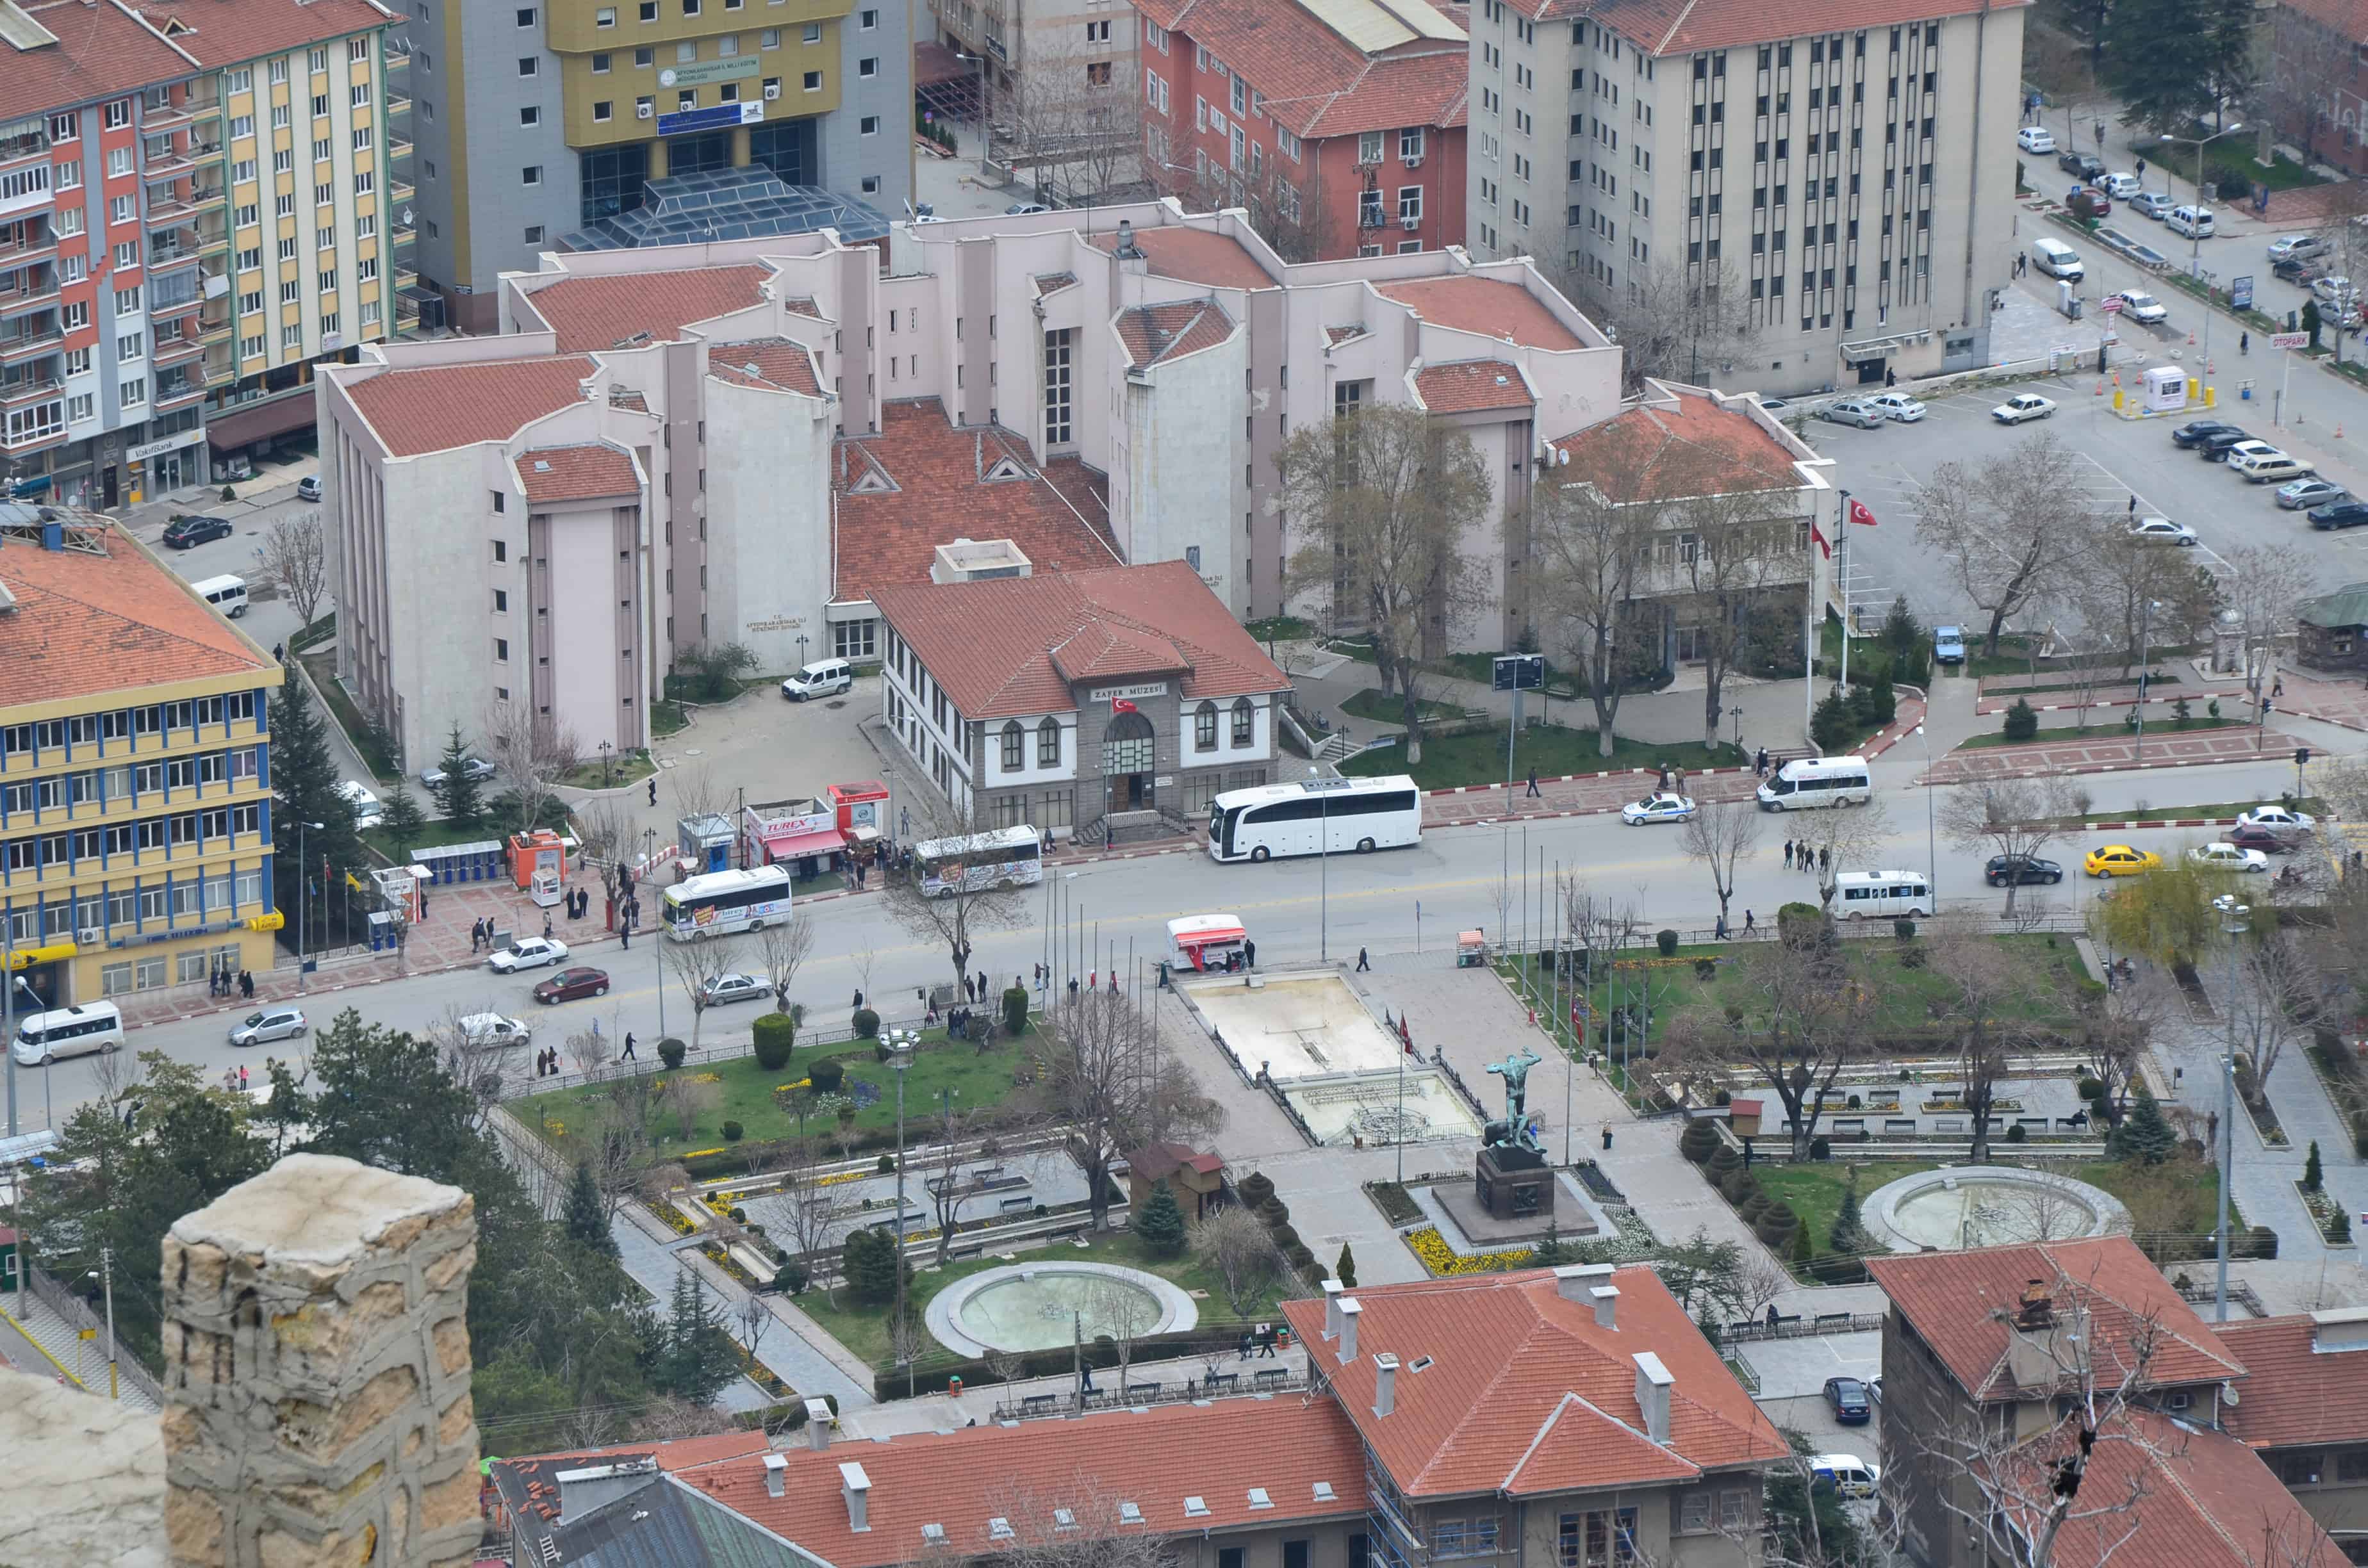 Zafer Meydanı from Afyon Kalesi in Afyon, Turkey